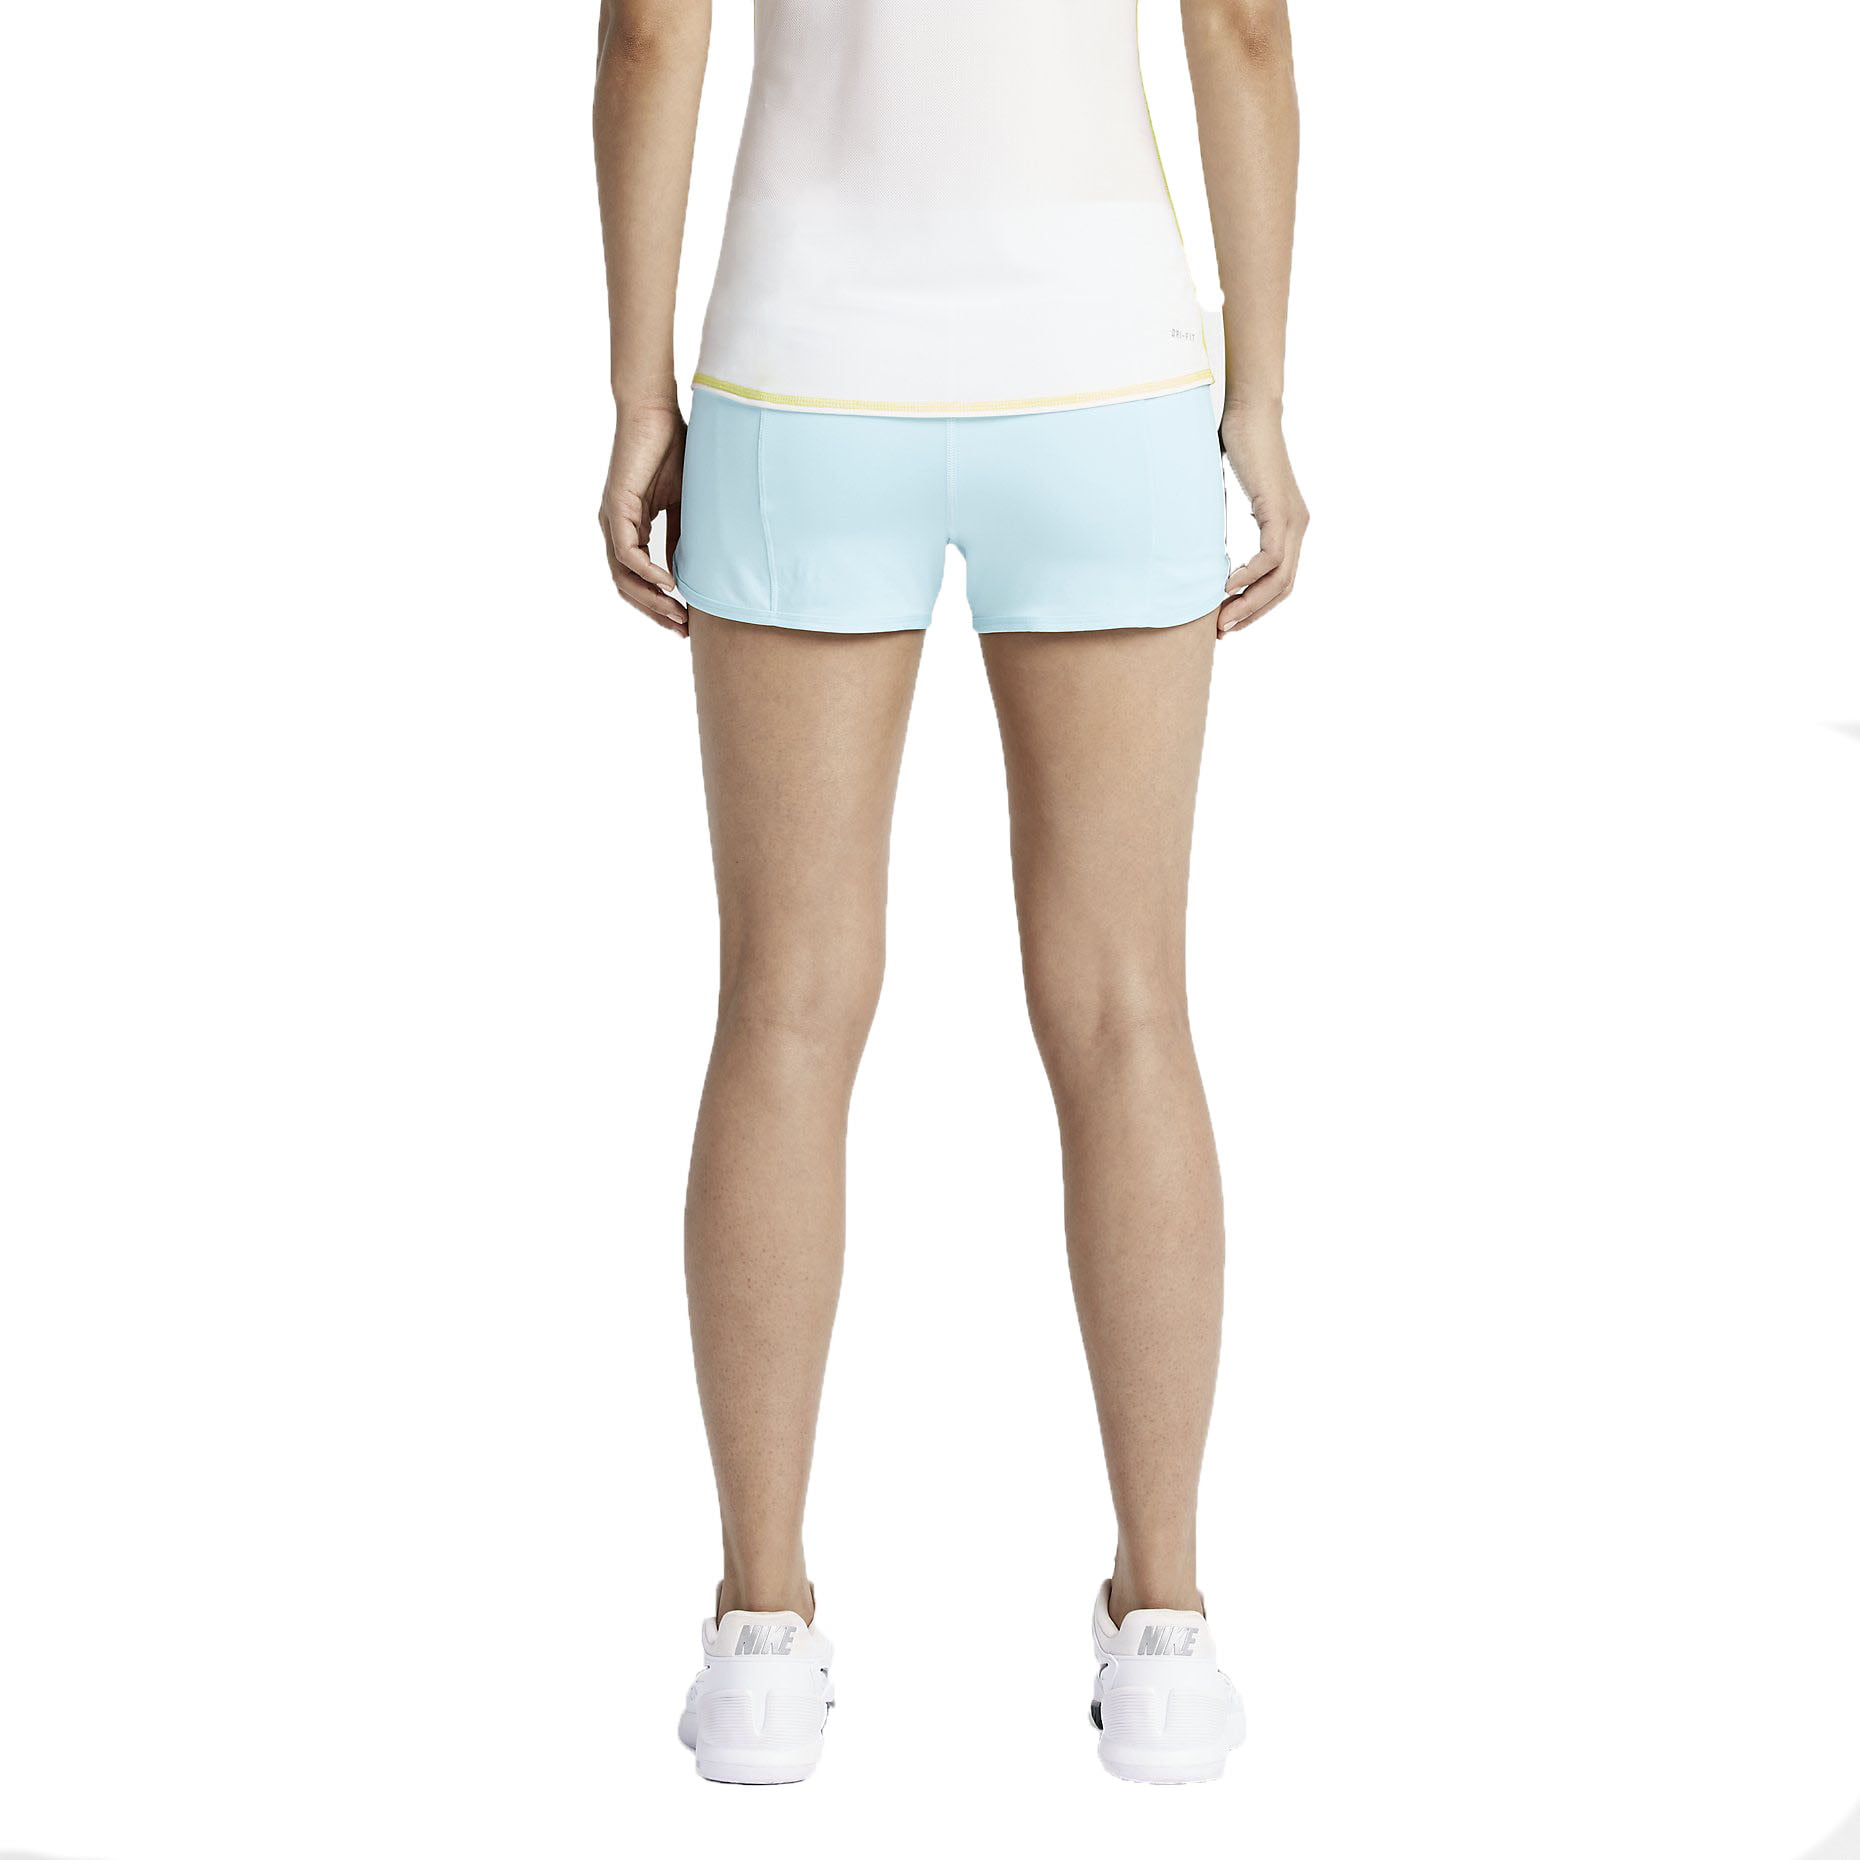 Nike Women's Dri-Fit Ace Court Tennis Shorts Walmart.com